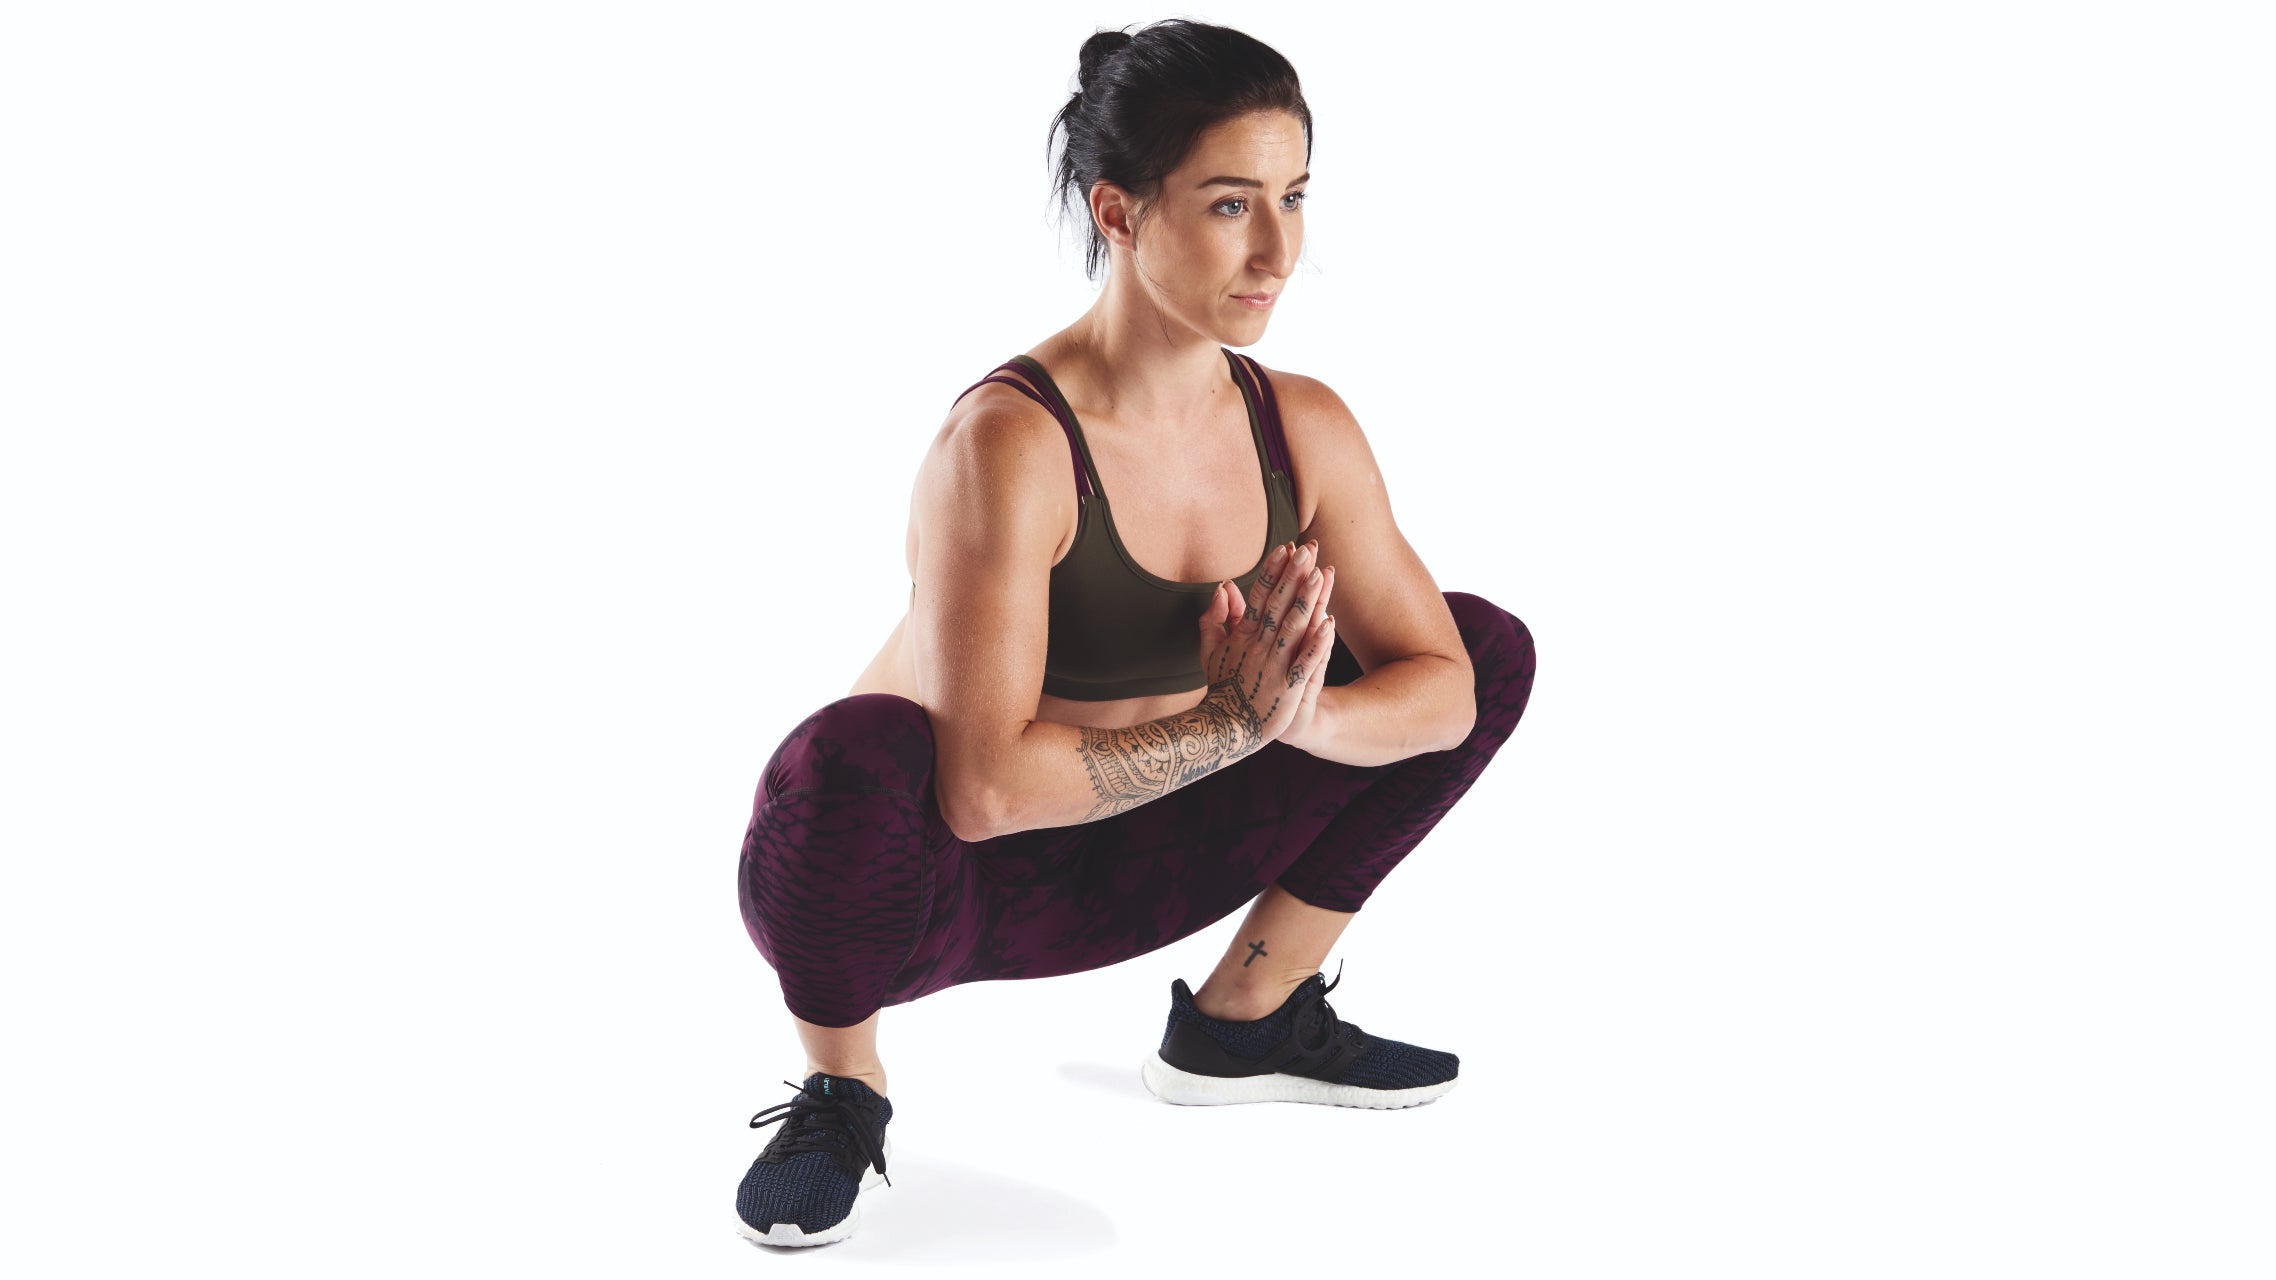 Yin Yoga for Hips: 5 Yin Yoga Poses to Loosen Your Hips